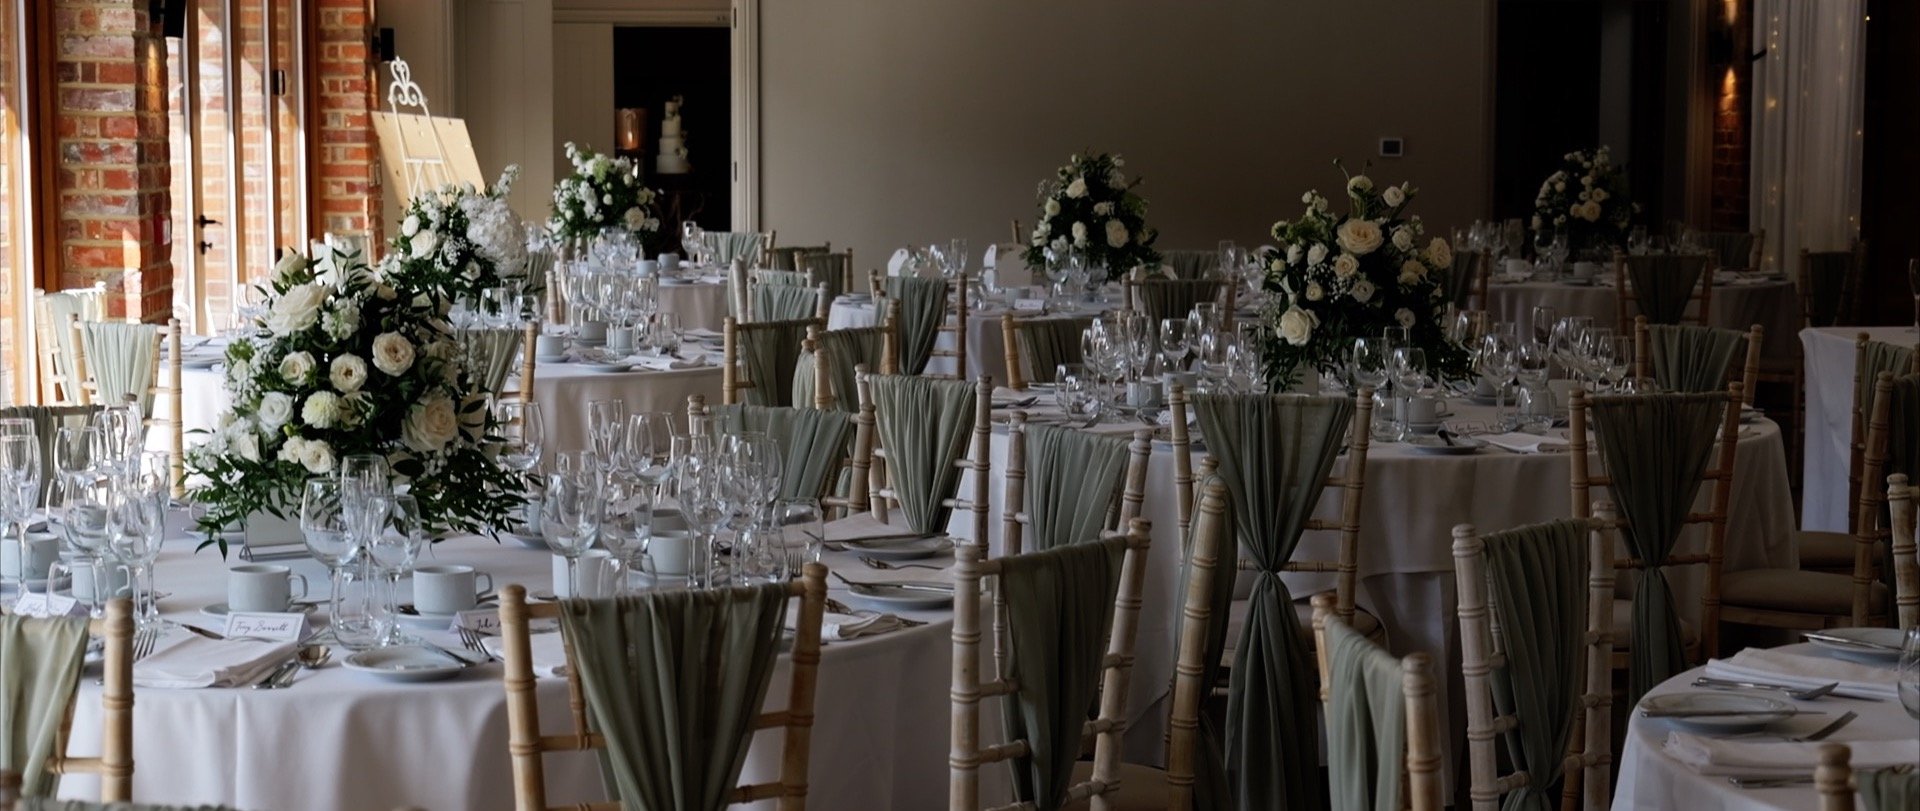 3 Cheers Media - Apton Hall Wedding Video - Wedding Breakfast area.jpg